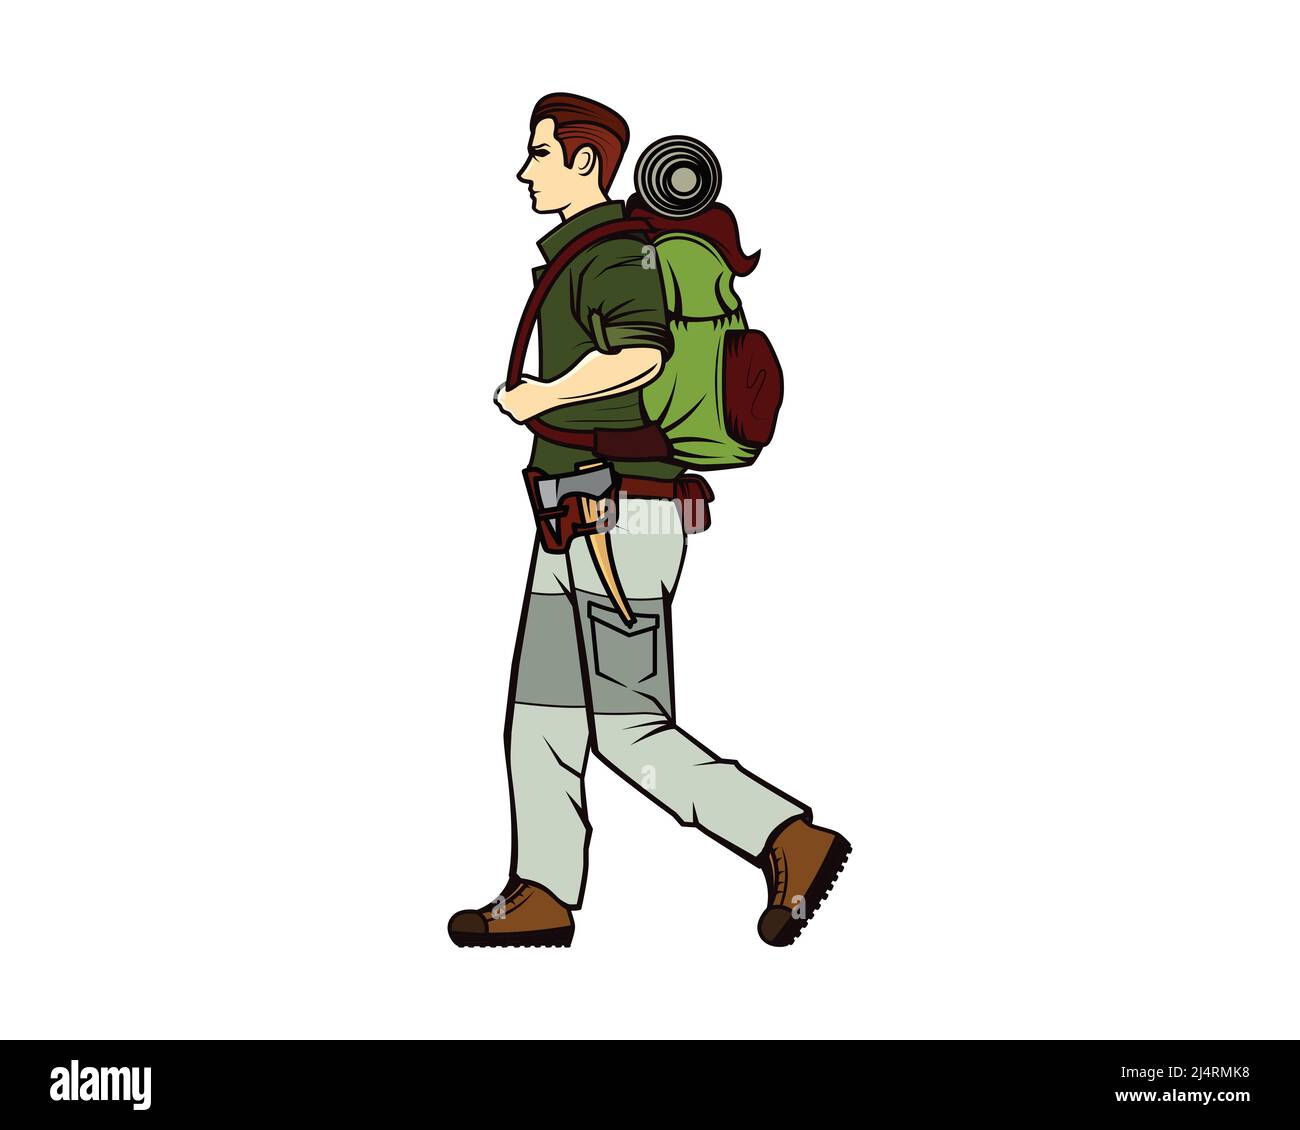 Hiking Man and Adventurer Illustration Vector Stock Vector